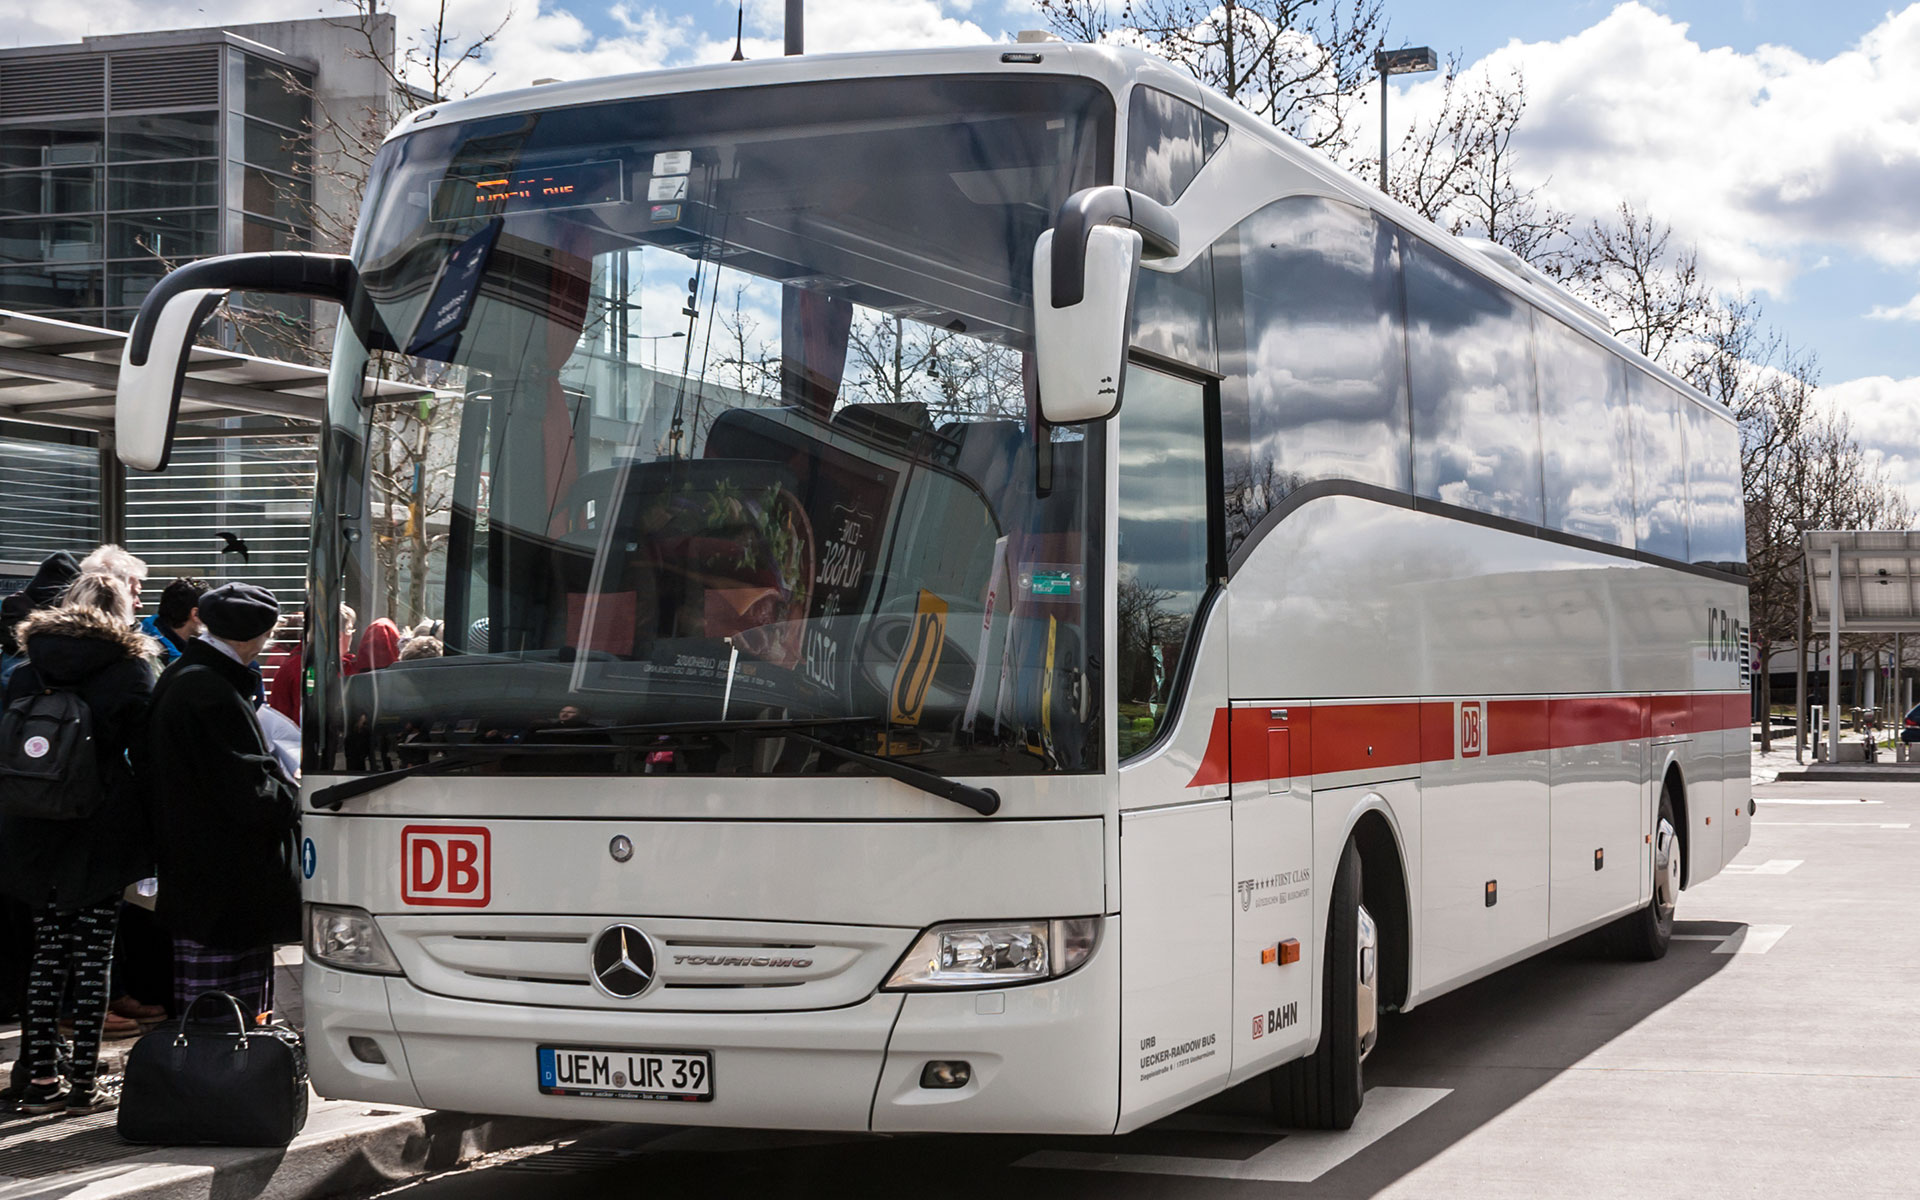 An IC-bus: 'der kleine Bruder der Bahn'. Deutsche Bahn (DB) has a growing network of international bus routes. DB markets the bus network as 'the small brother of the railway' (photo by Matti Blume).